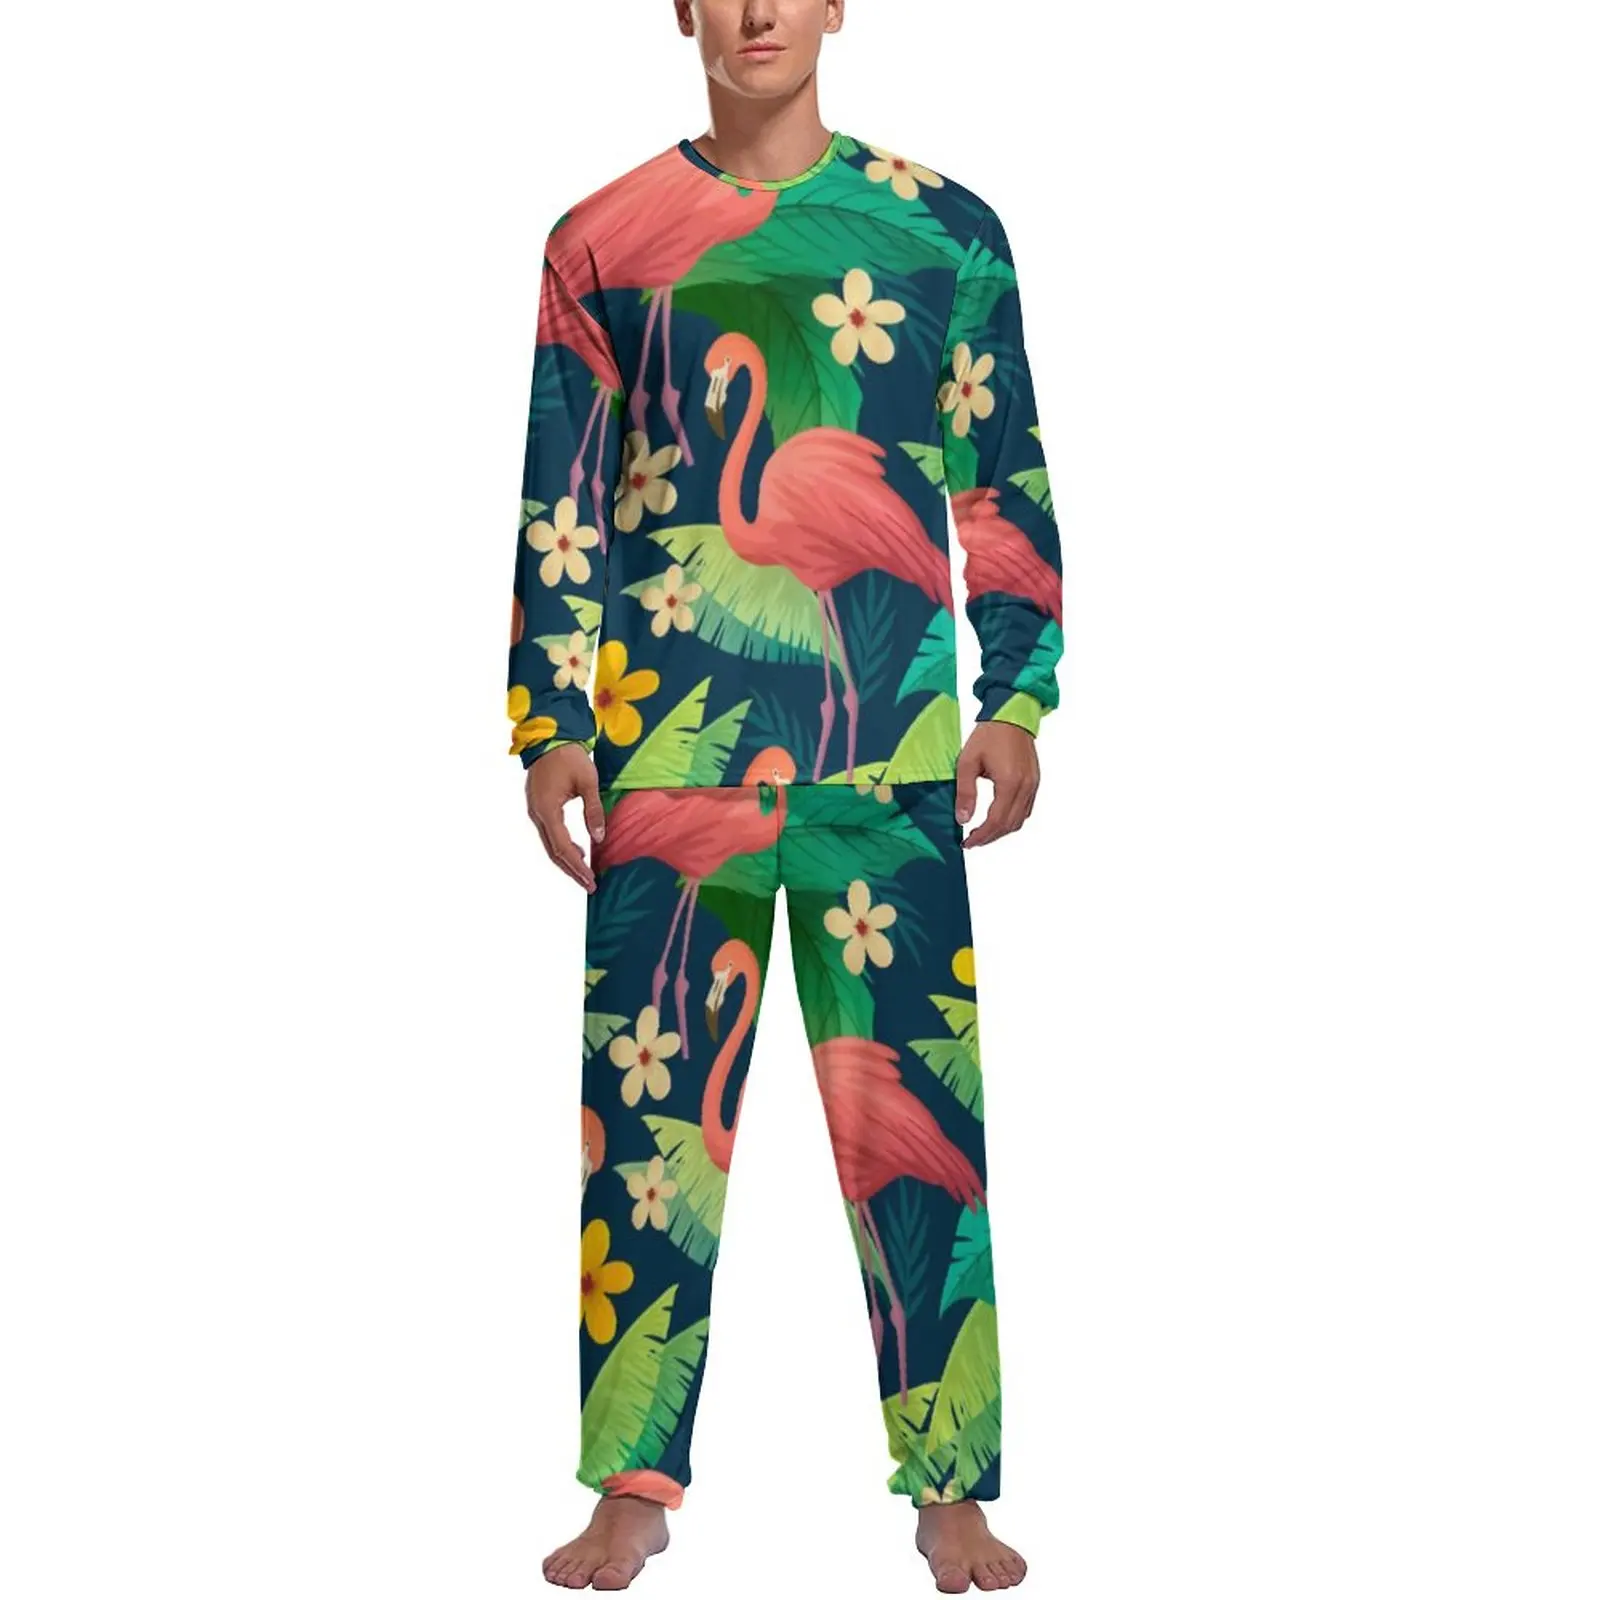 

Tropical Flamingo Pajamas Autumn Two Piece Green Leaves Print Cool Pajama Sets Man Long Sleeve Casual Graphic Sleepwear